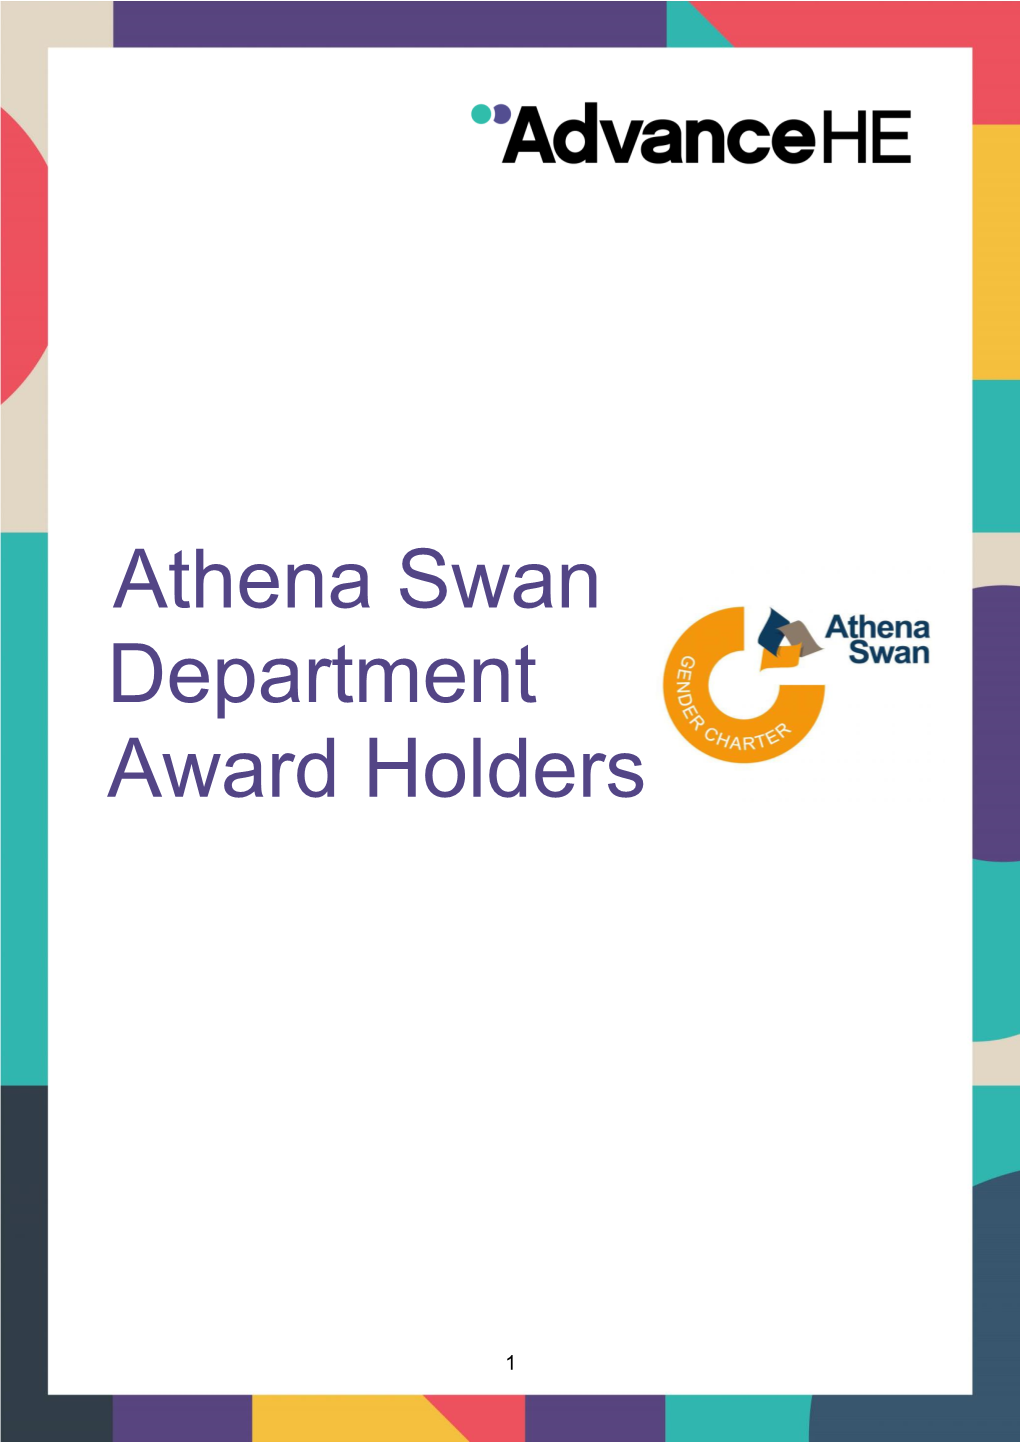 Athena Swan Department Award Holders October 2020